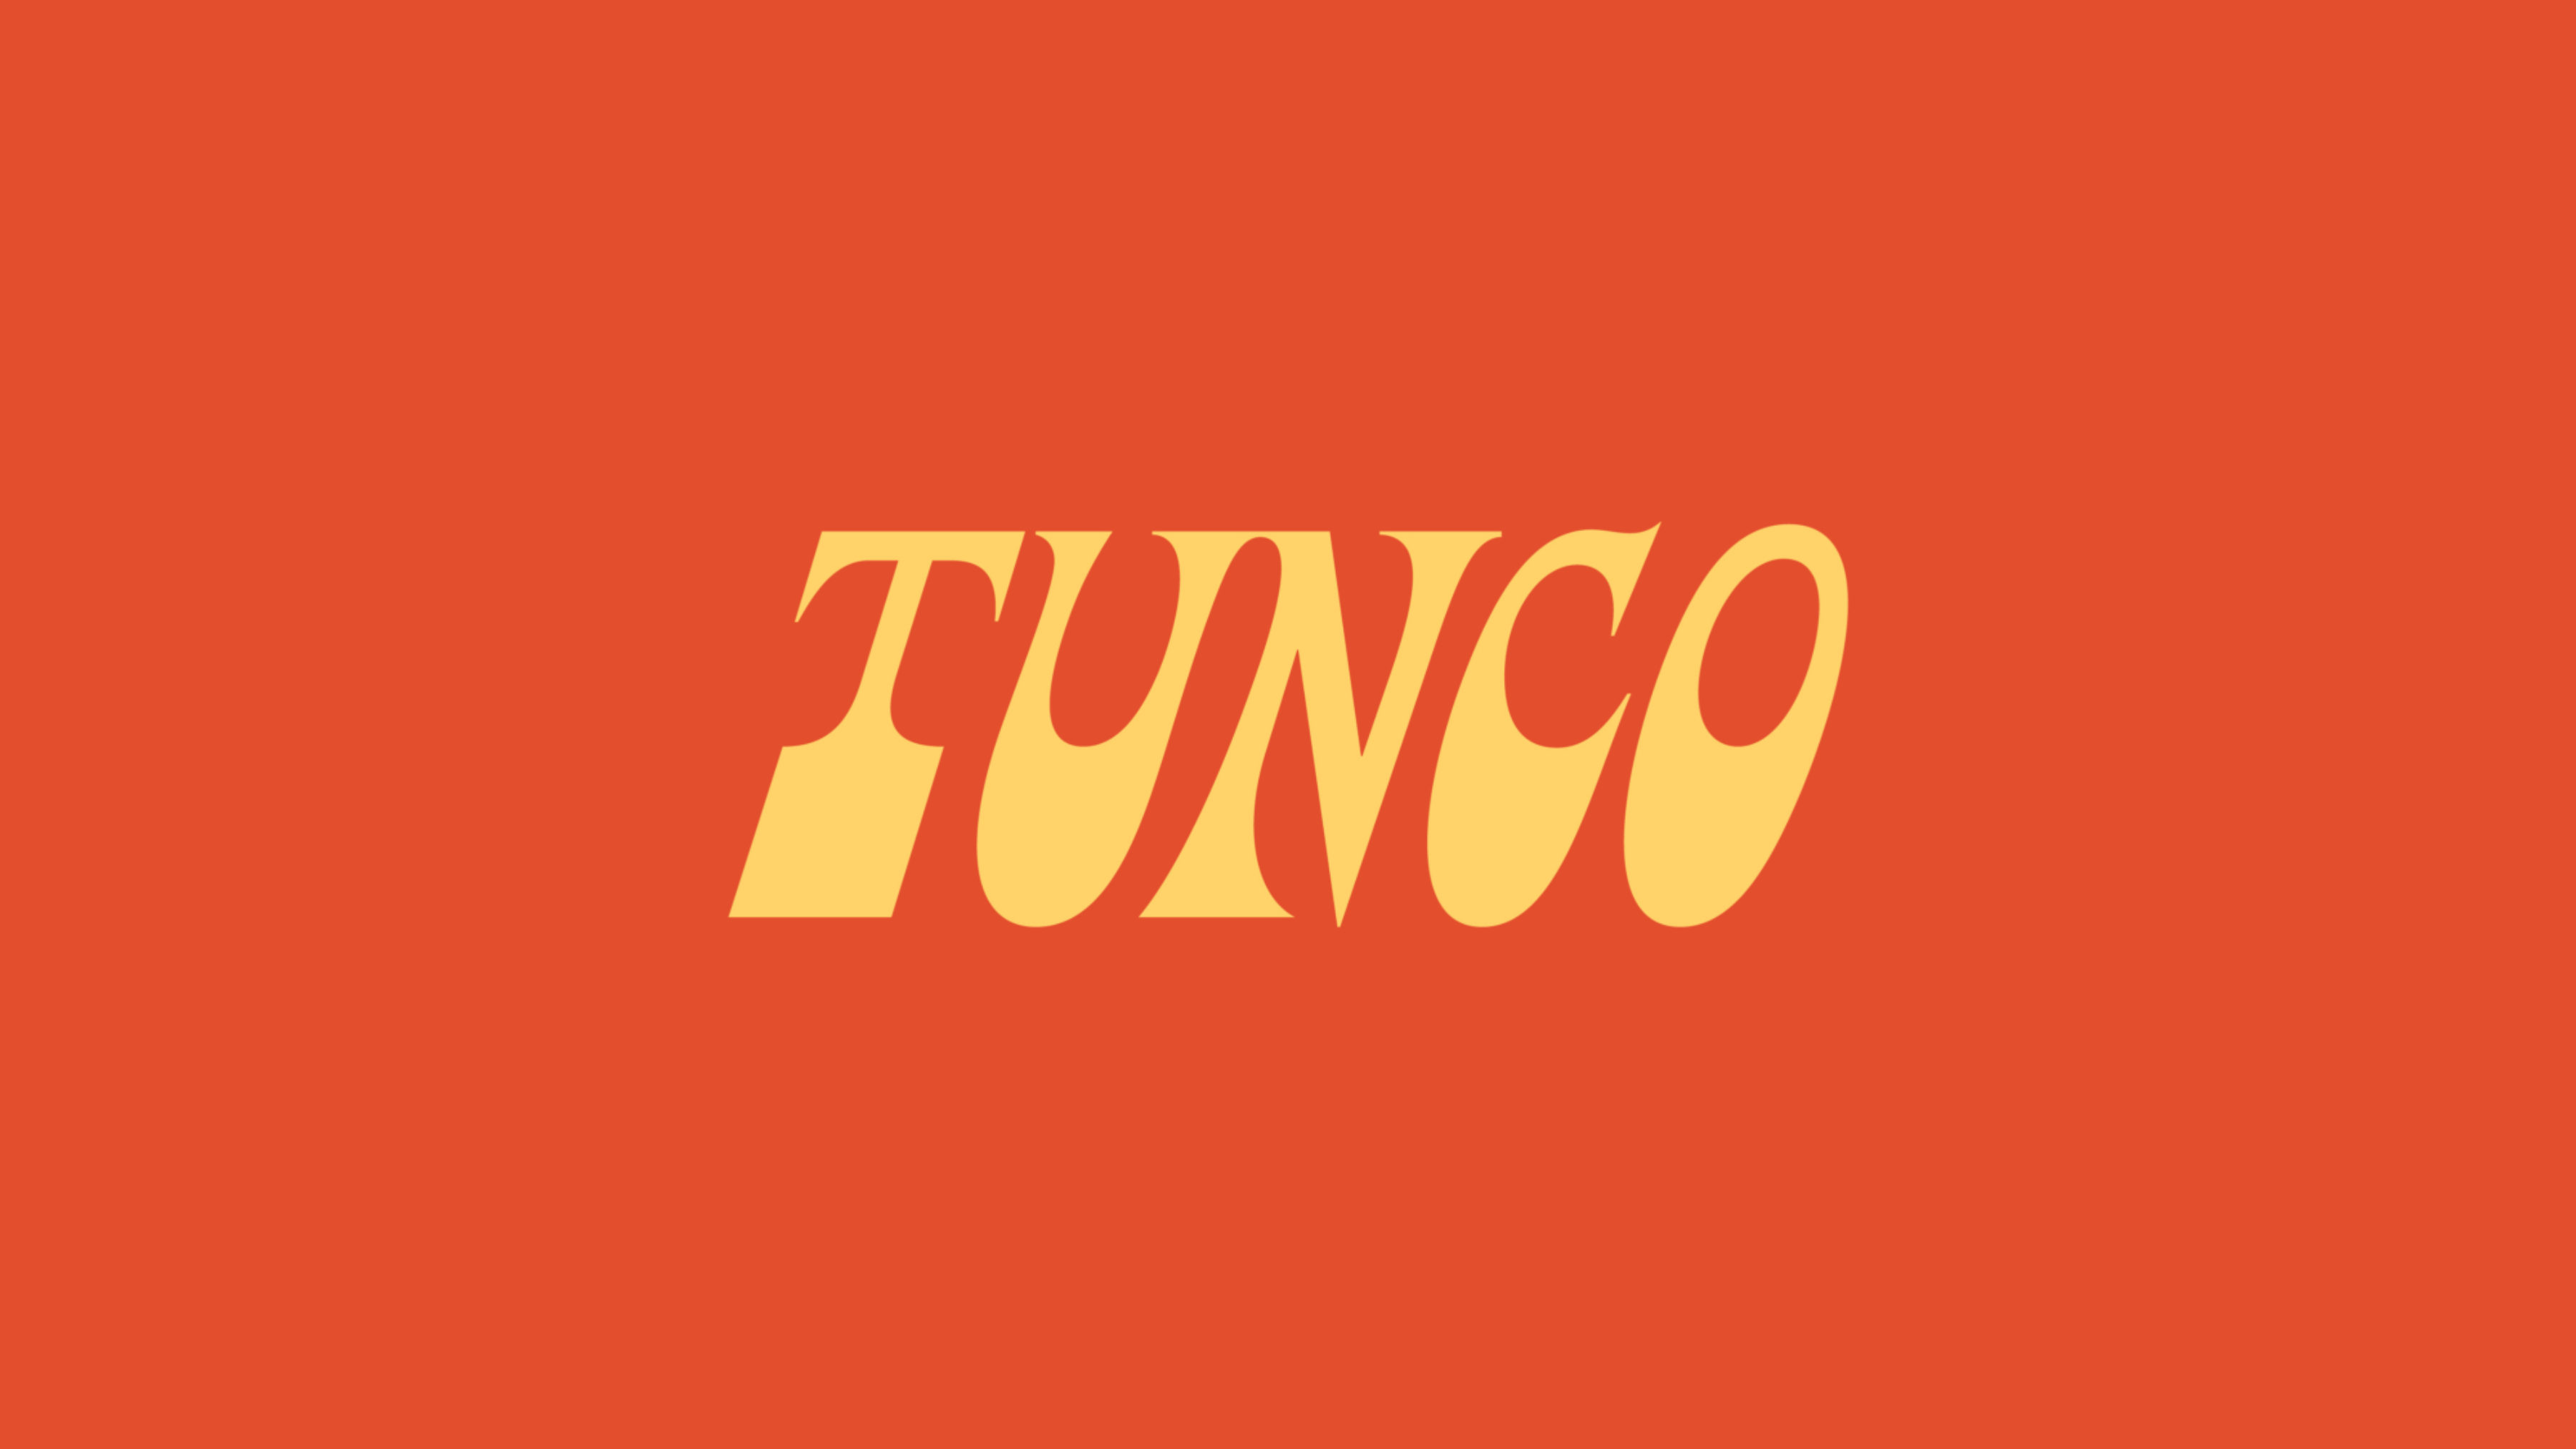 https://6252589.fs1.hubspotusercontent-na1.net/hubfs/6252589/TRY/Website/Cases/TUNCO-01-Logo.jpeg